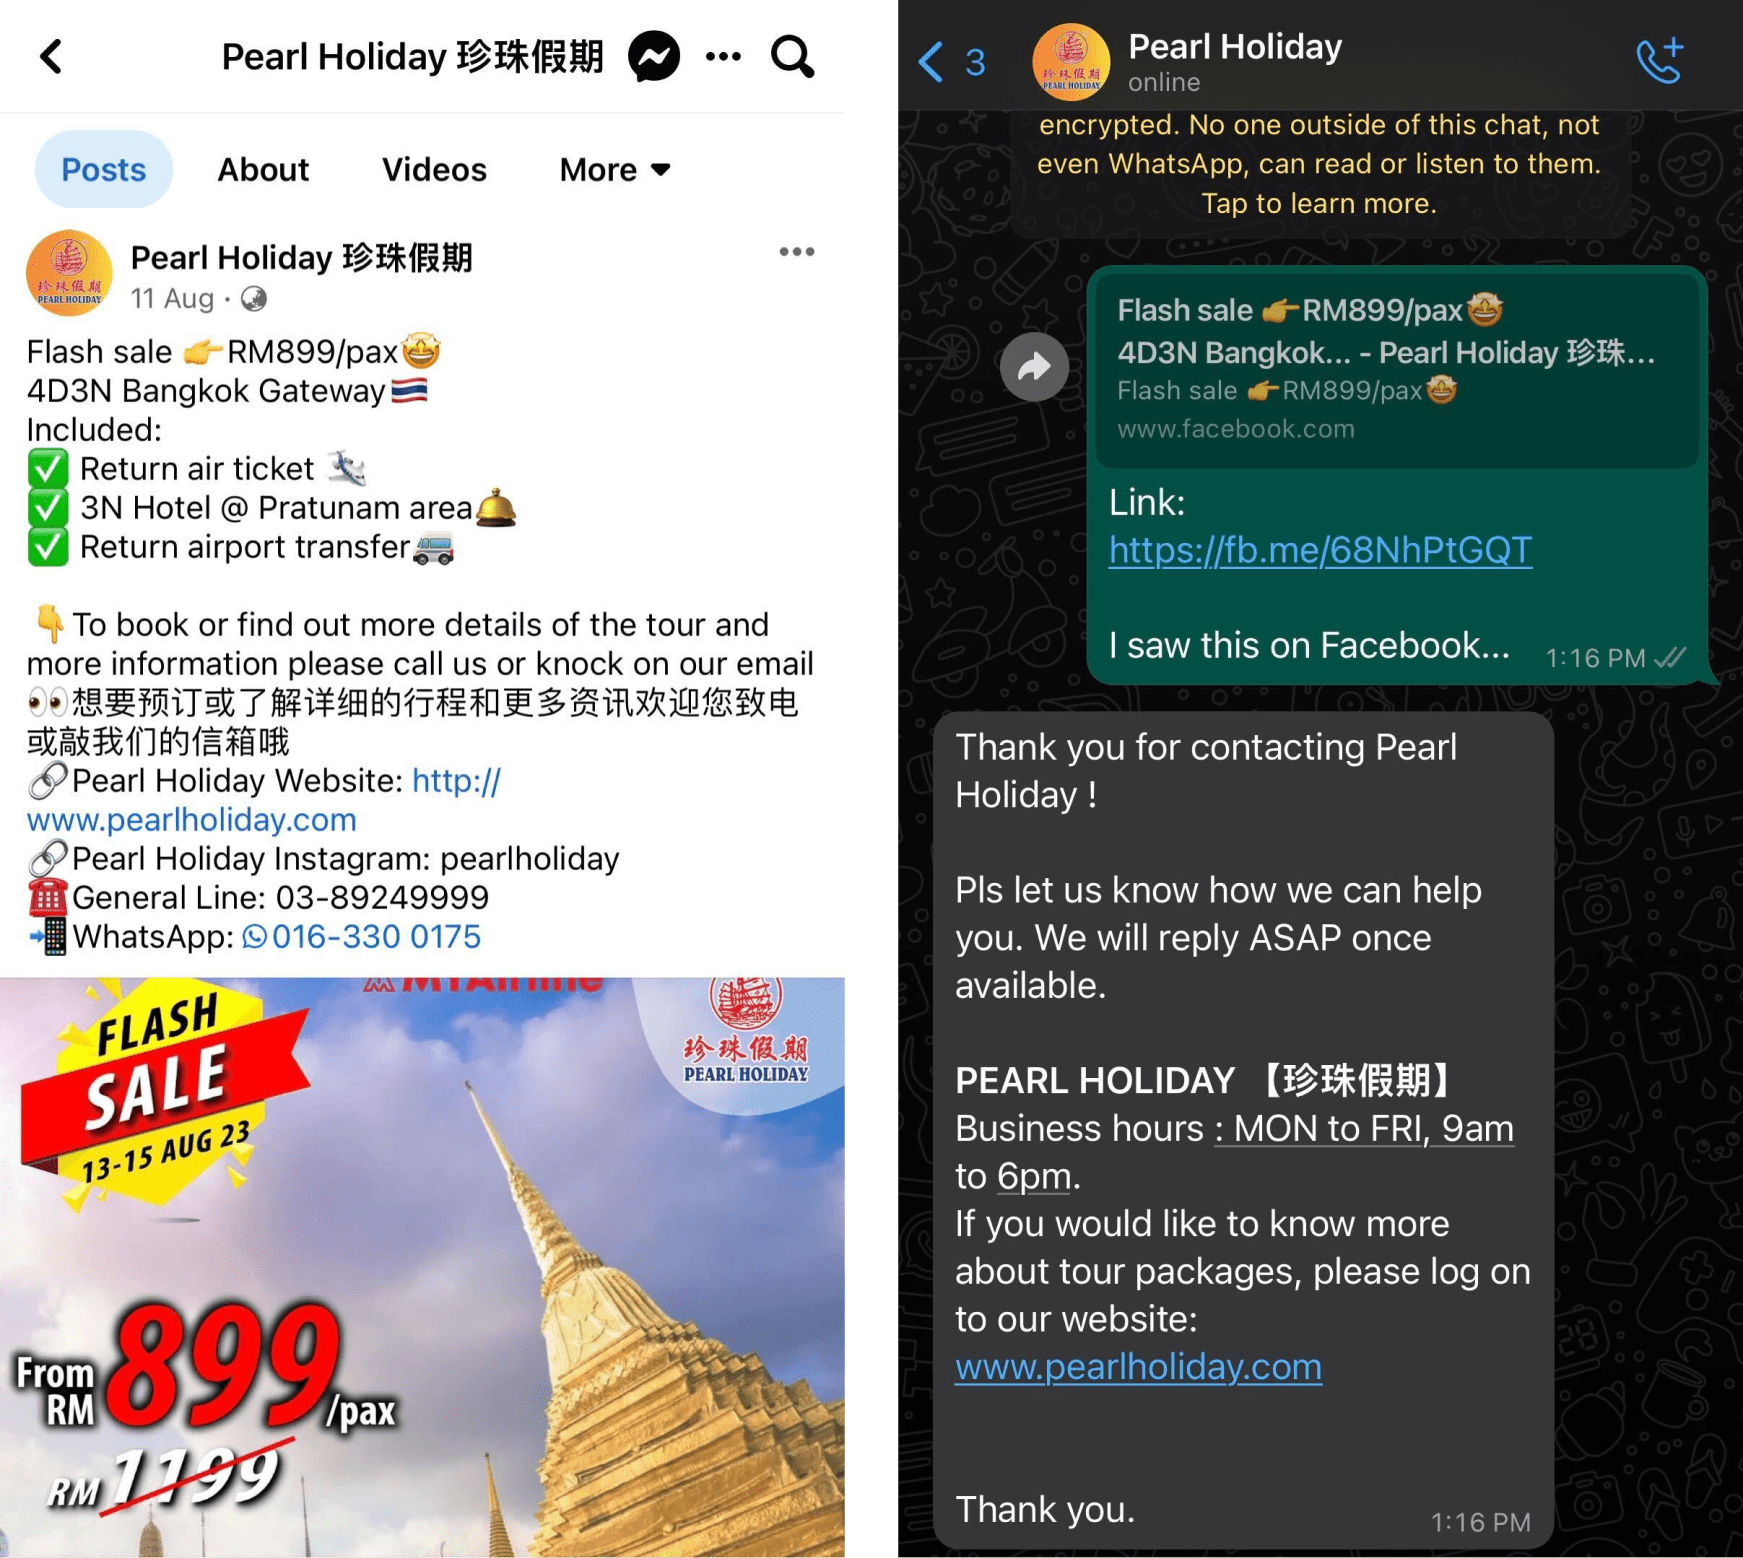 Pearl Holiday uses WhatsApp link on social media